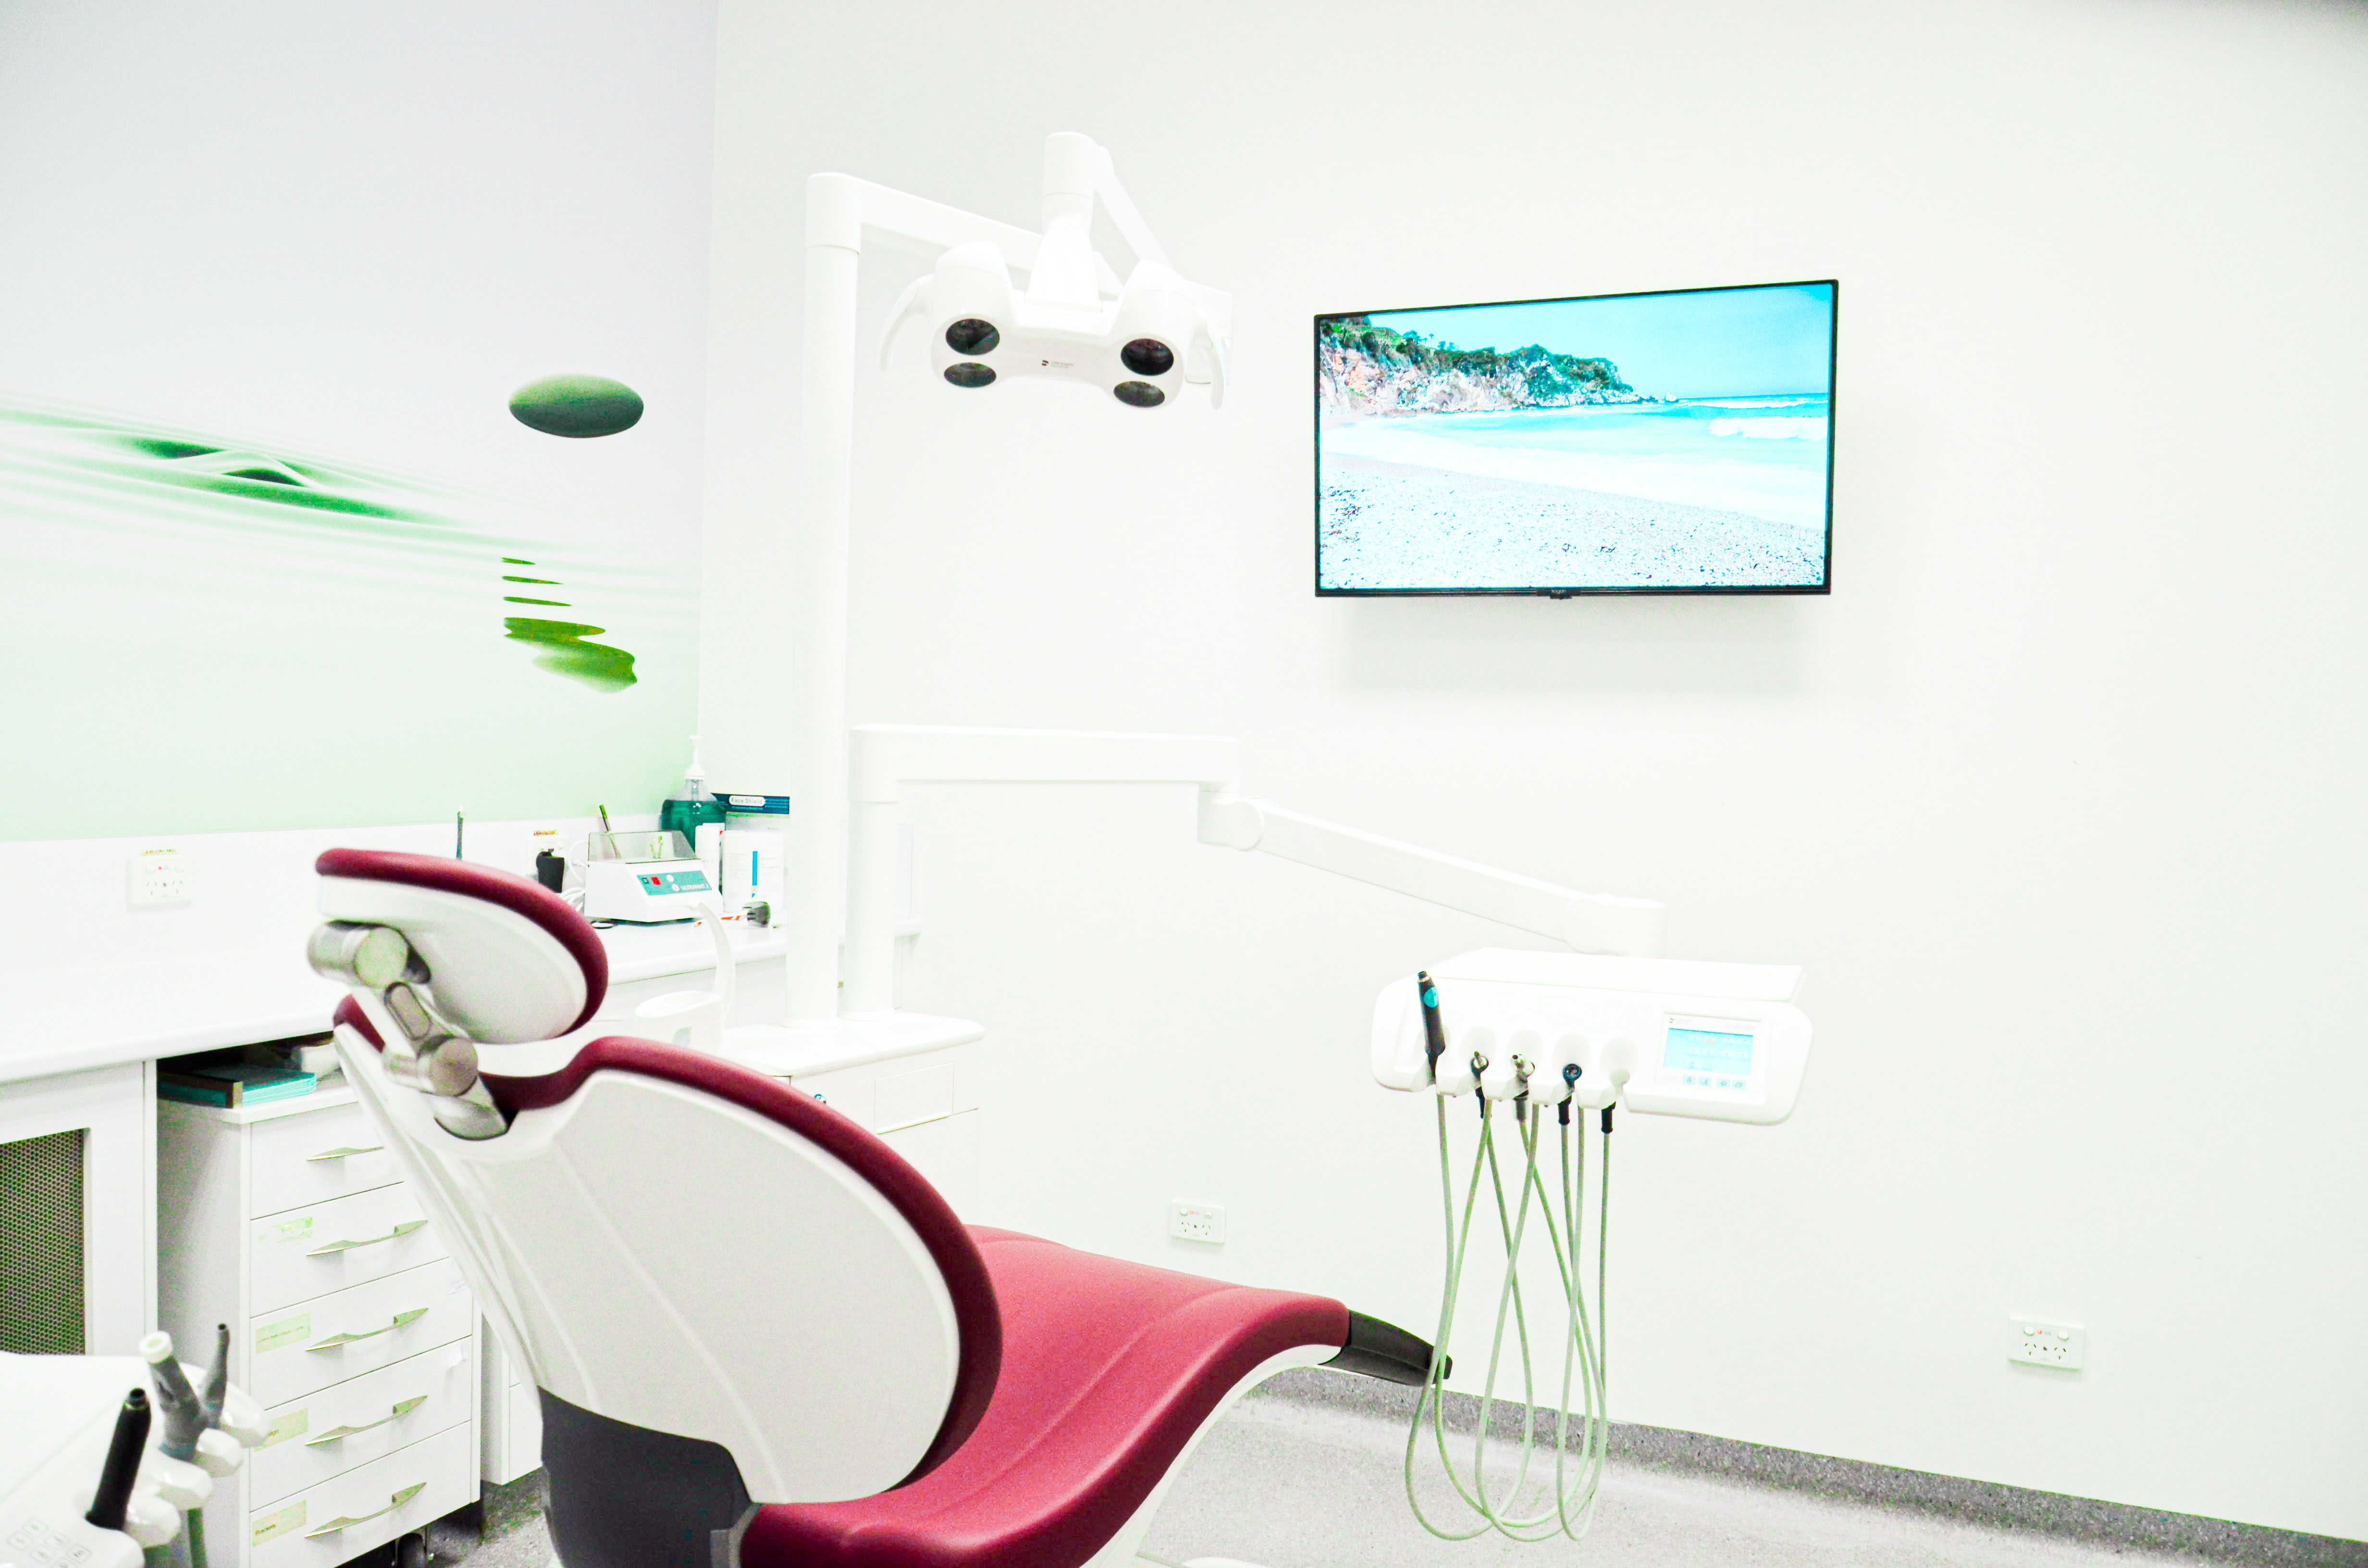 New Smiles Dental | Suite 1/340 Bell St, Preston VIC 3072, Australia | Phone: 0394730800